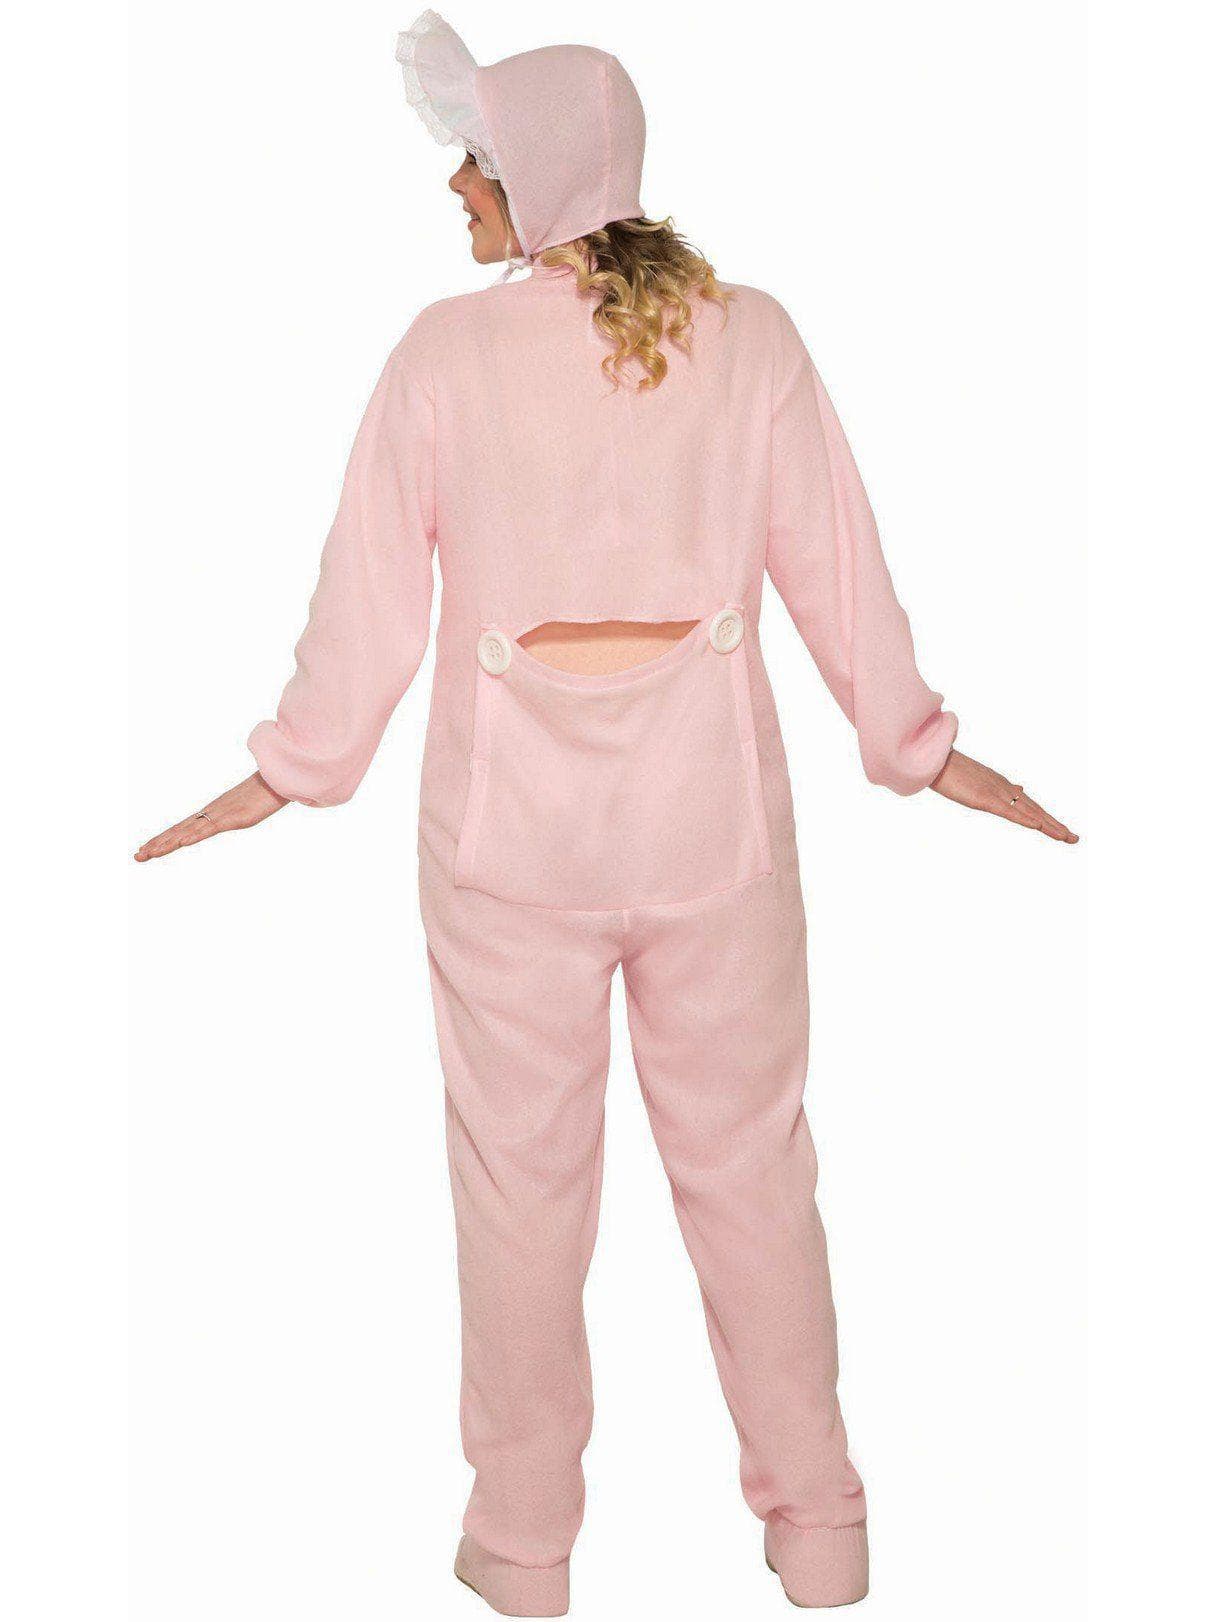 Adult Jammies Pink Costume - costumes.com